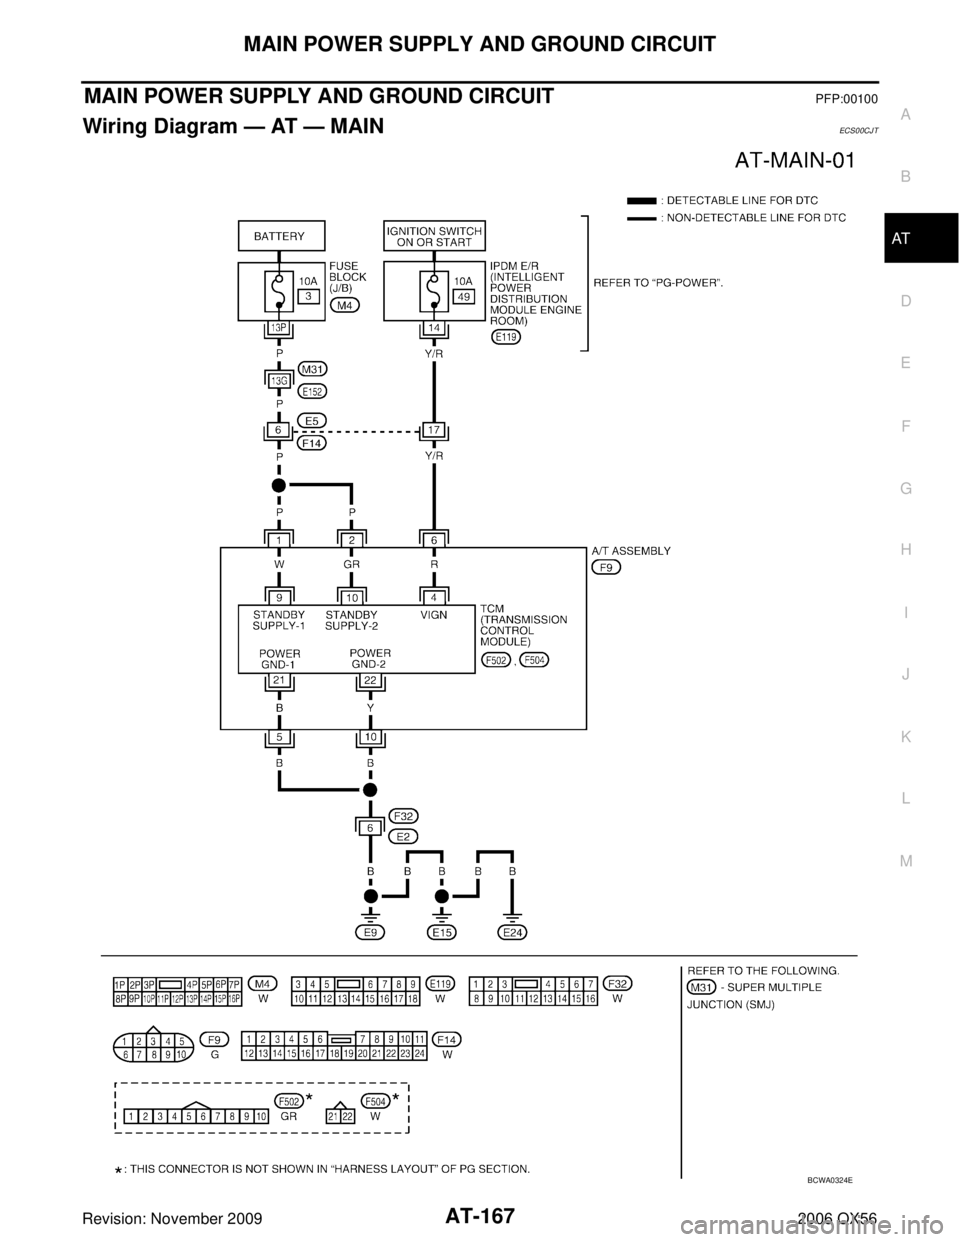 INFINITI QX56 2006  Factory User Guide MAIN POWER SUPPLY AND GROUND CIRCUITAT-167
DE
F
G H
I
J
K L
M A
B
AT
Revision: November 2009 2006 QX56
MAIN POWER SUPPLY AND GROUND CIRCUITPFP:00100
Wiring Diagram — AT — MAINECS00CJT
BCWA0324E 